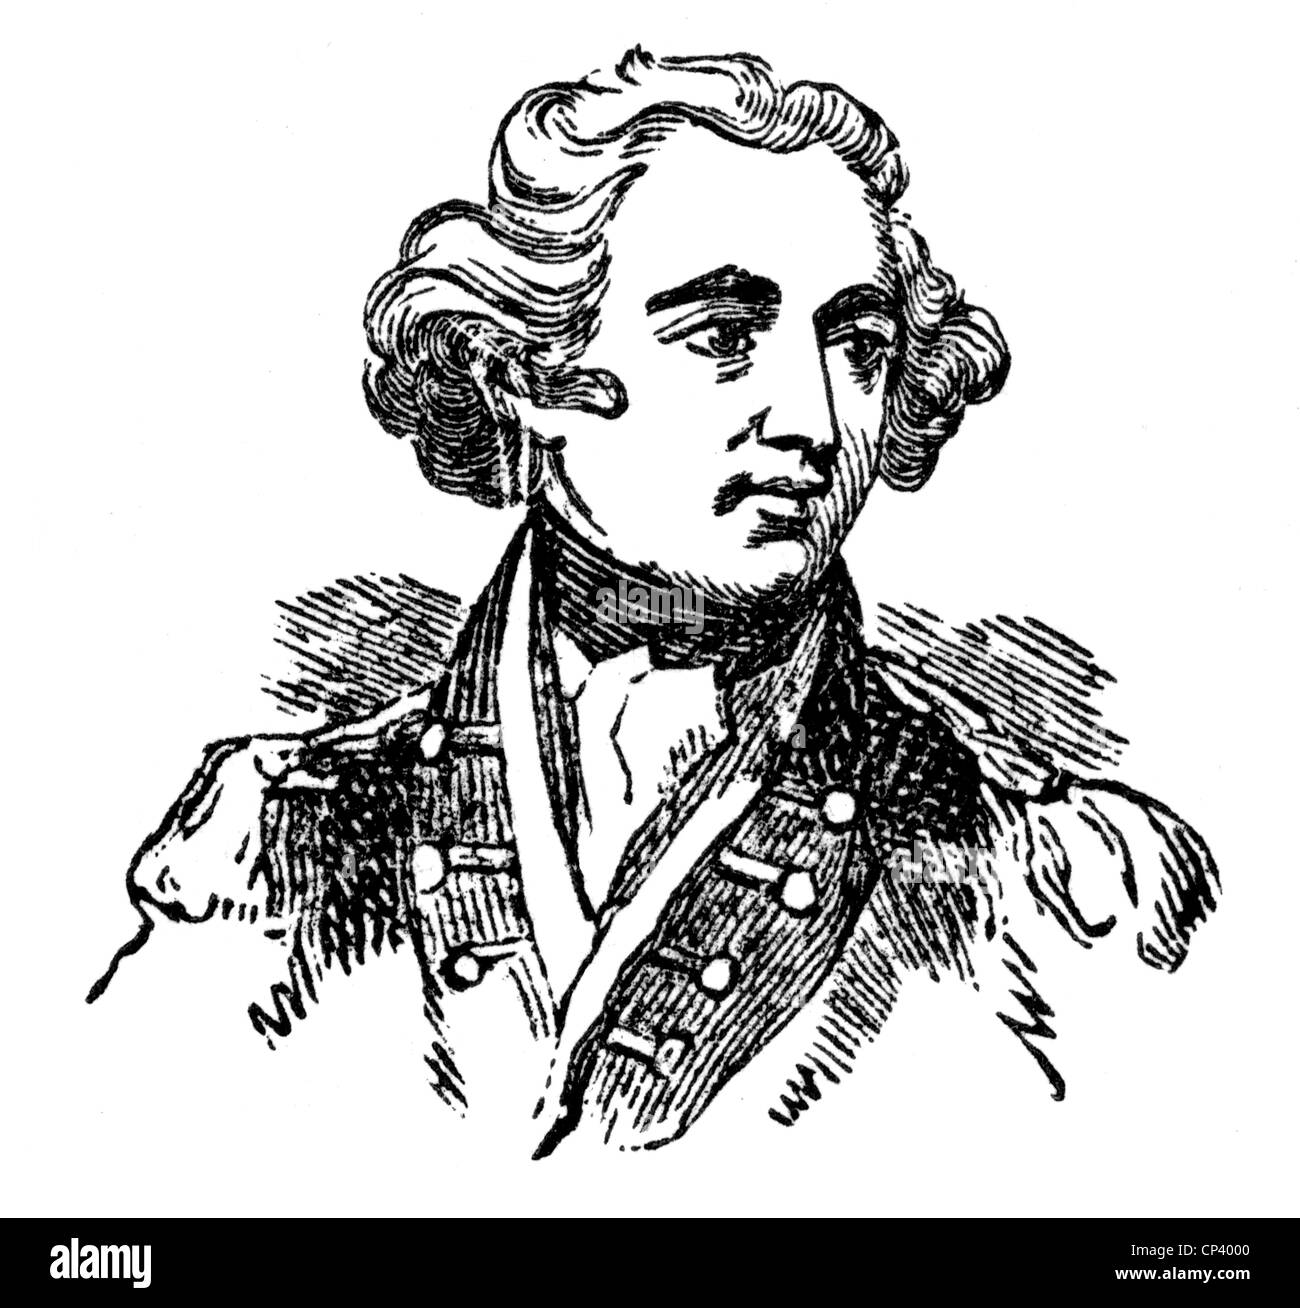 Tarleton, Banastre, 21.8.1754 - 16.1.1833, Britisch general and politician, portrait, wood engraving, 19th century, Stock Photo